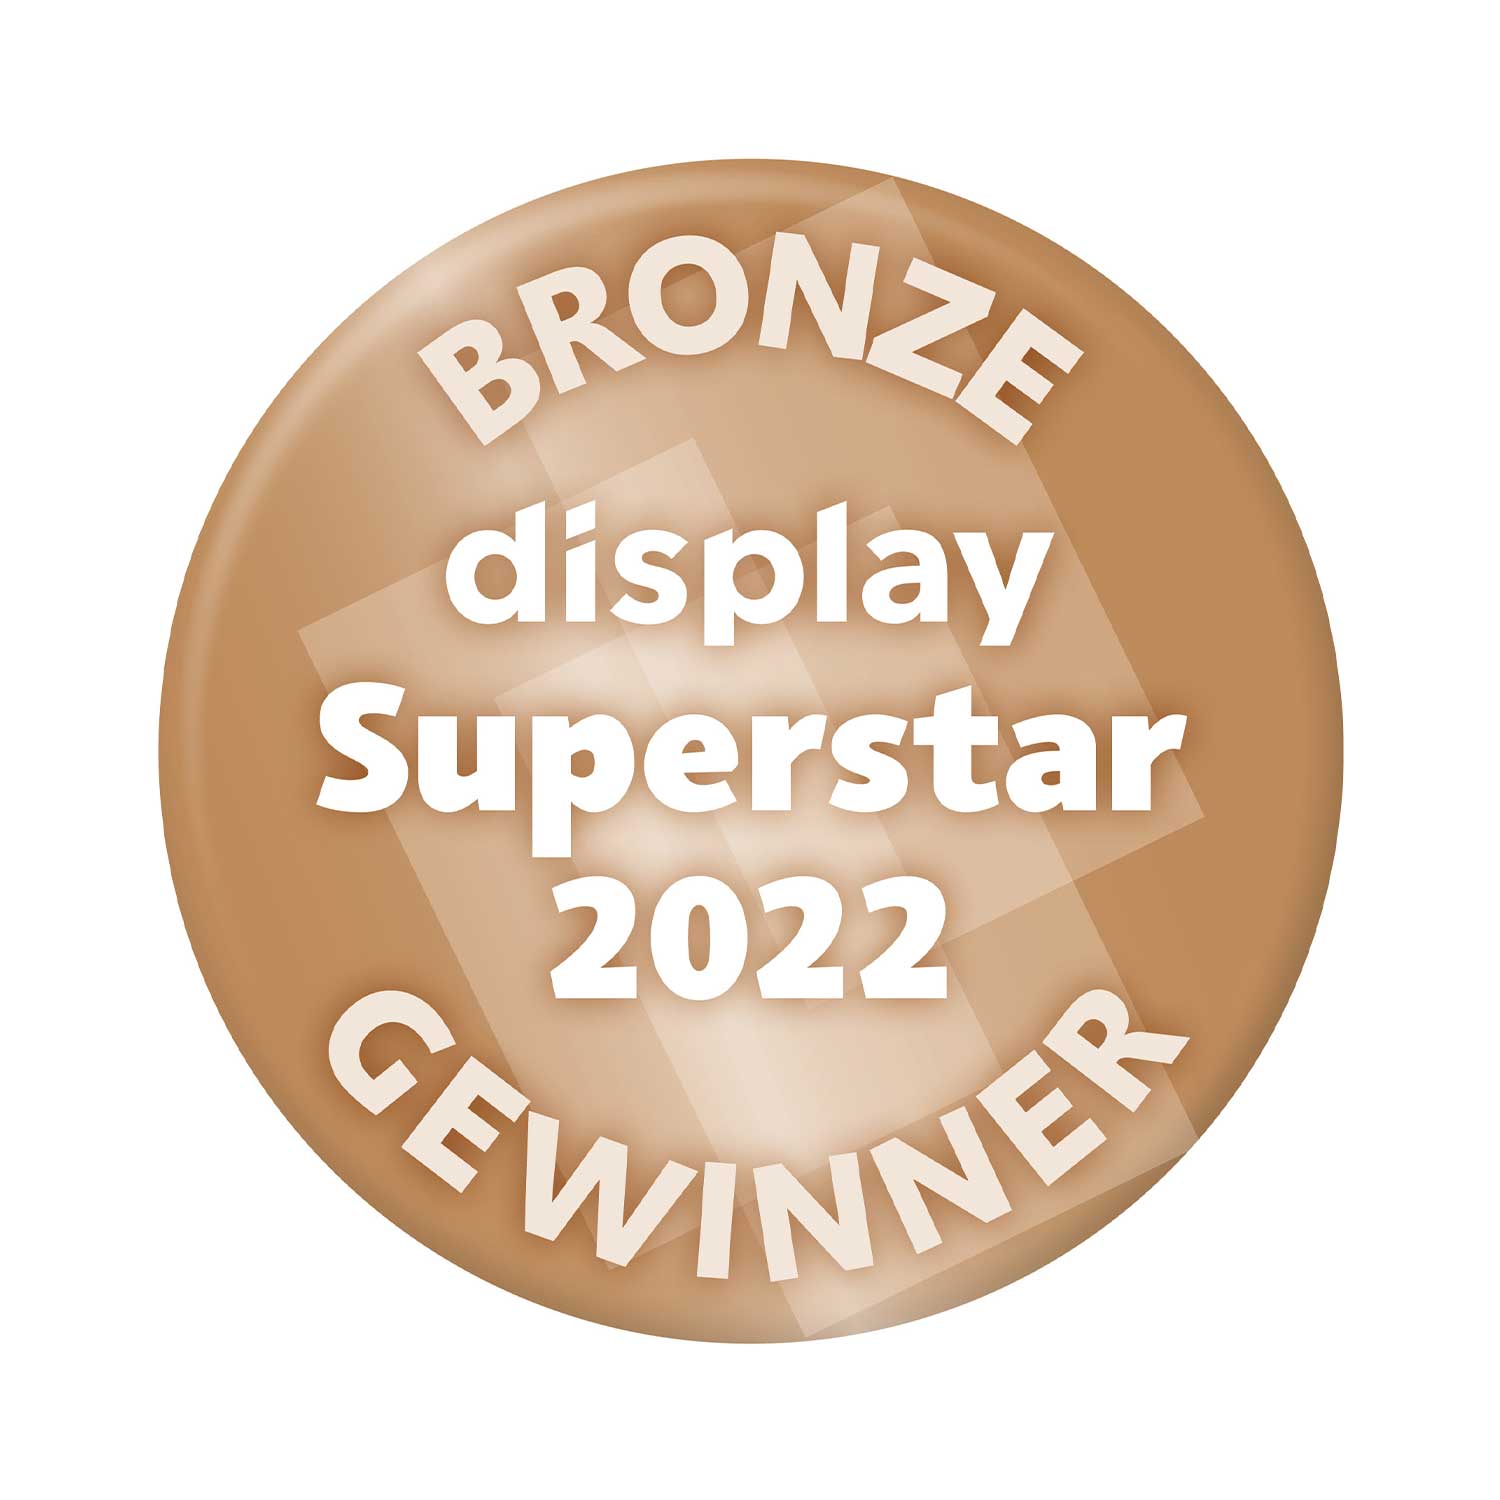 Bronze au Display Superstar Award 2022